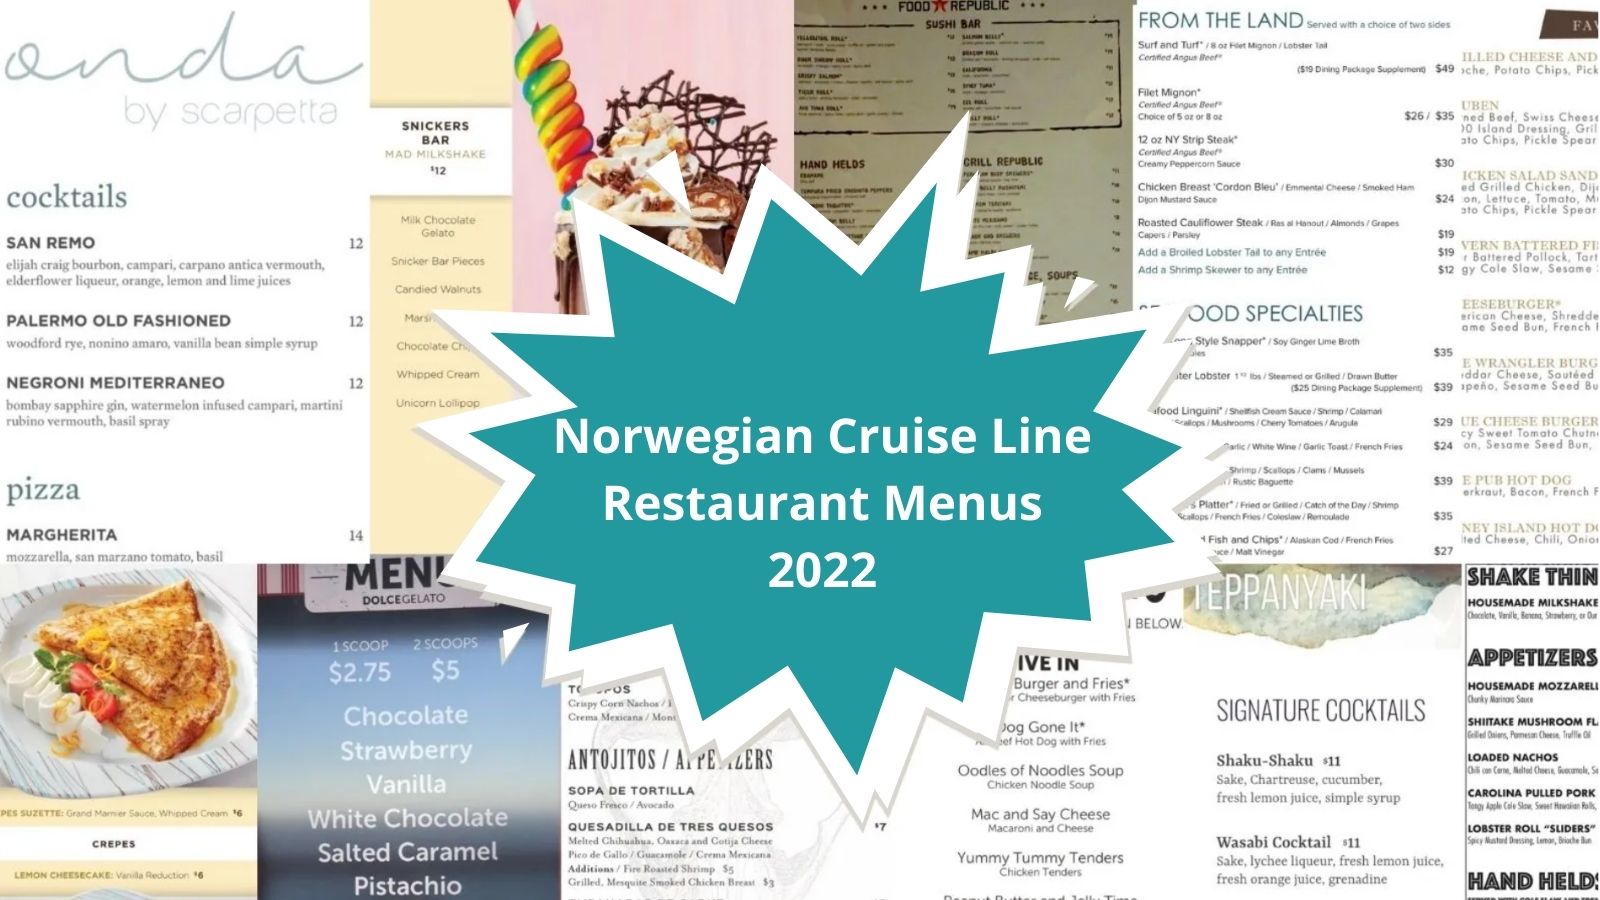 Norwegian Dining and Restaurant Menus 2022 · Prof. Cruise, Ship Tour